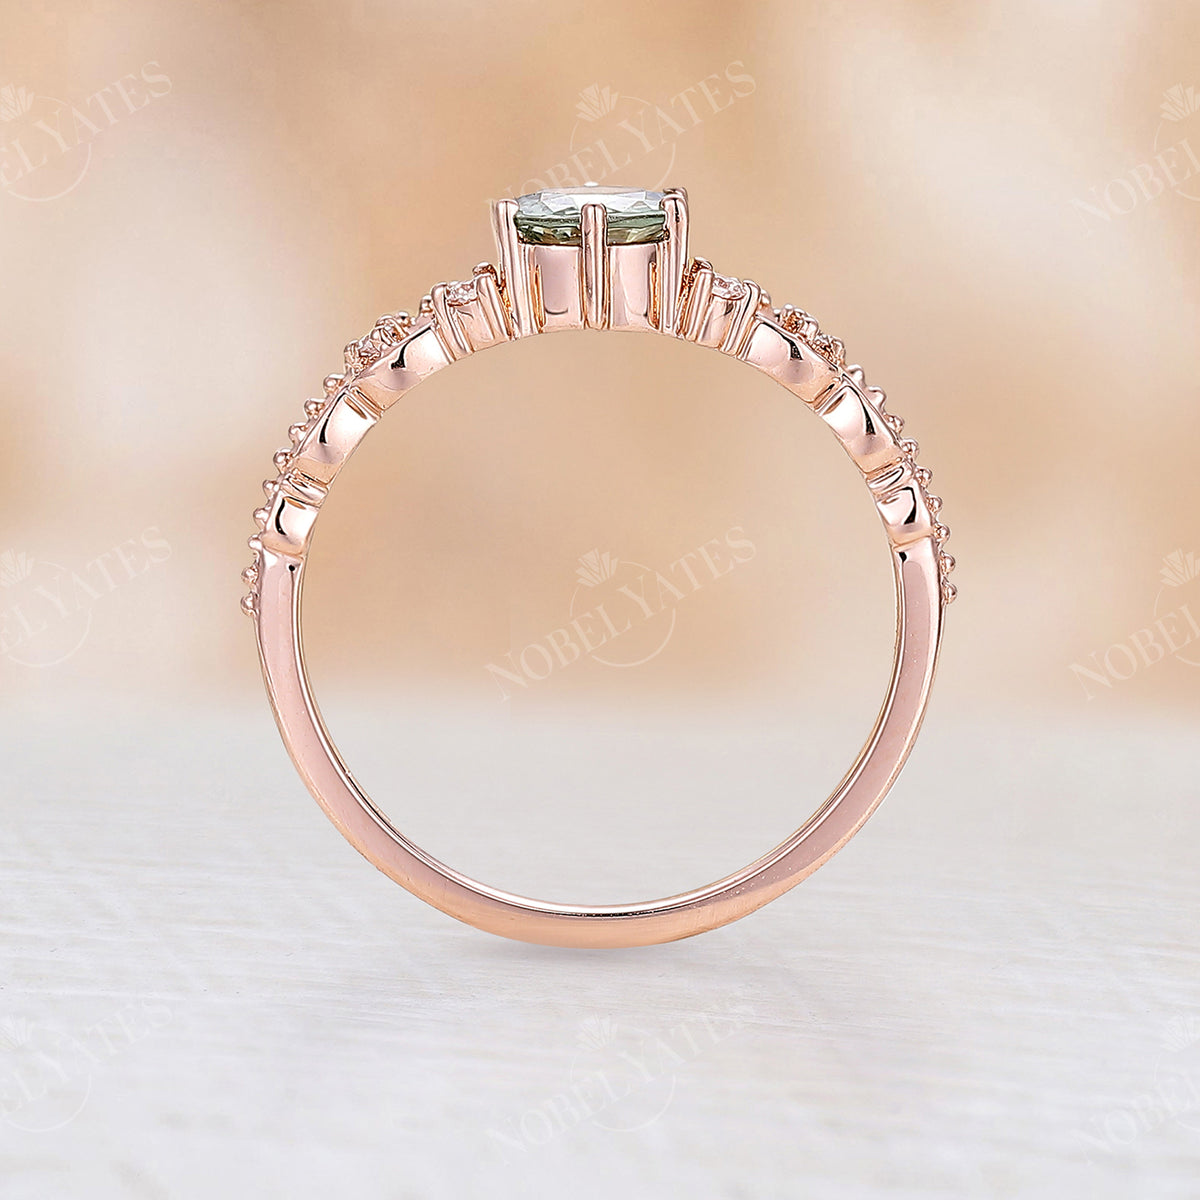 Vintage Round Natural Green Sapphire Milgrain Engagement Ring Rose Gold